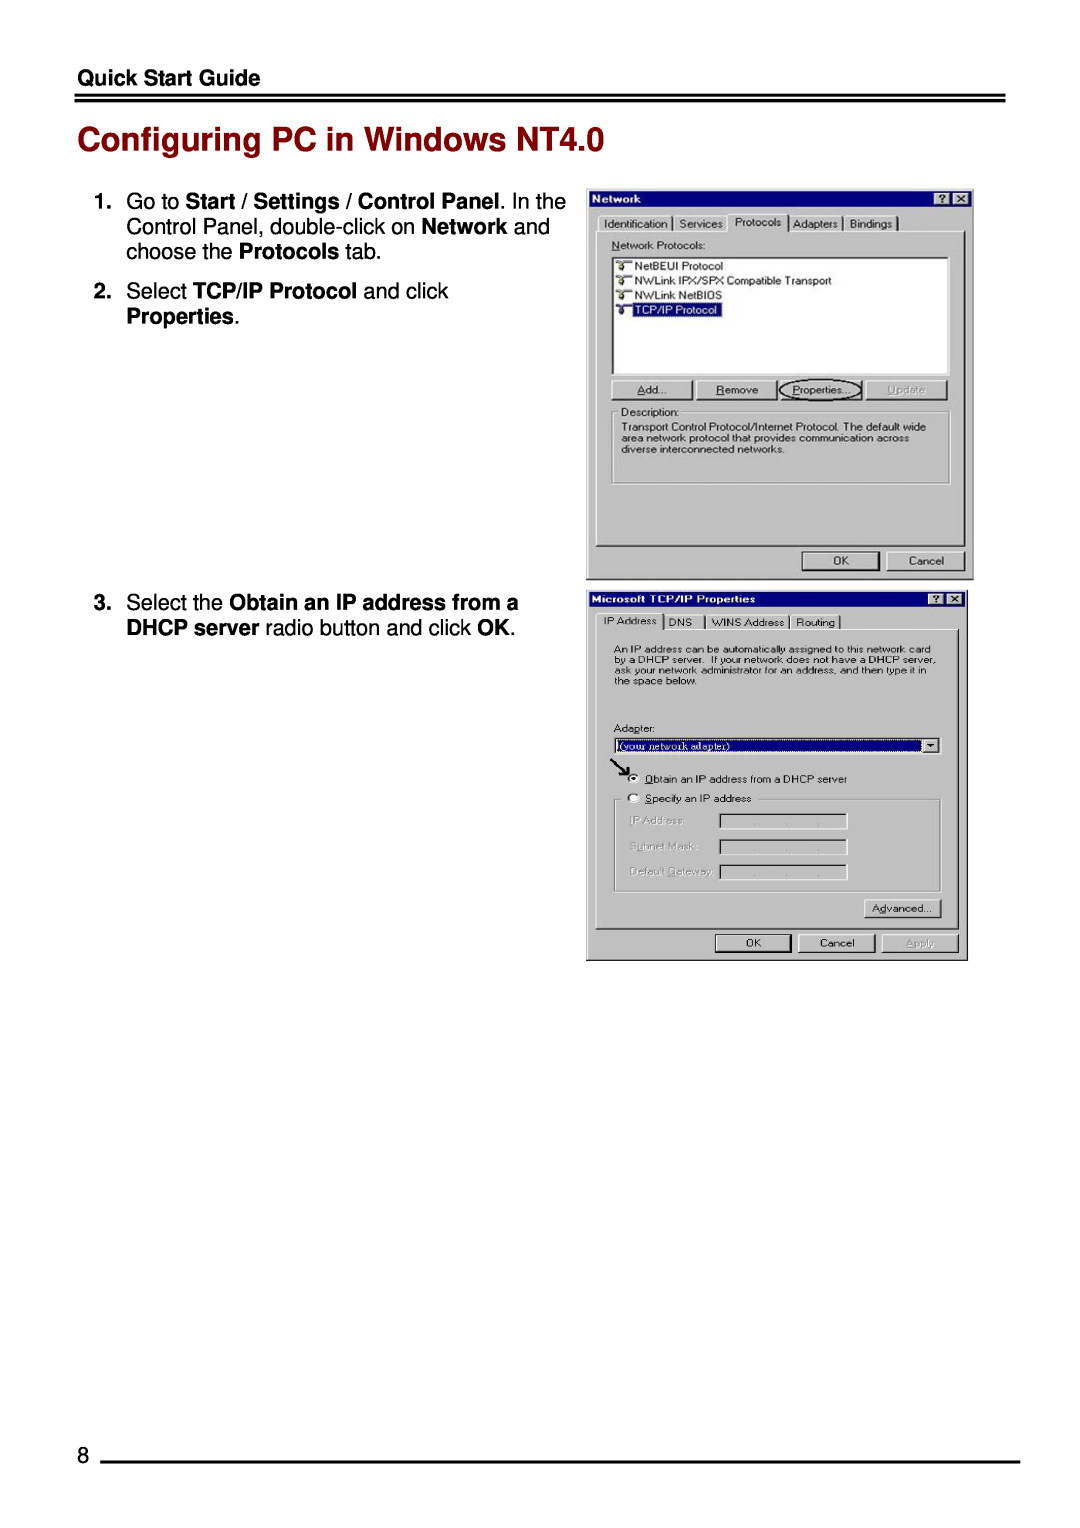 Billion Electric Company 8520 quick start Configuring PC in Windows NT4.0 